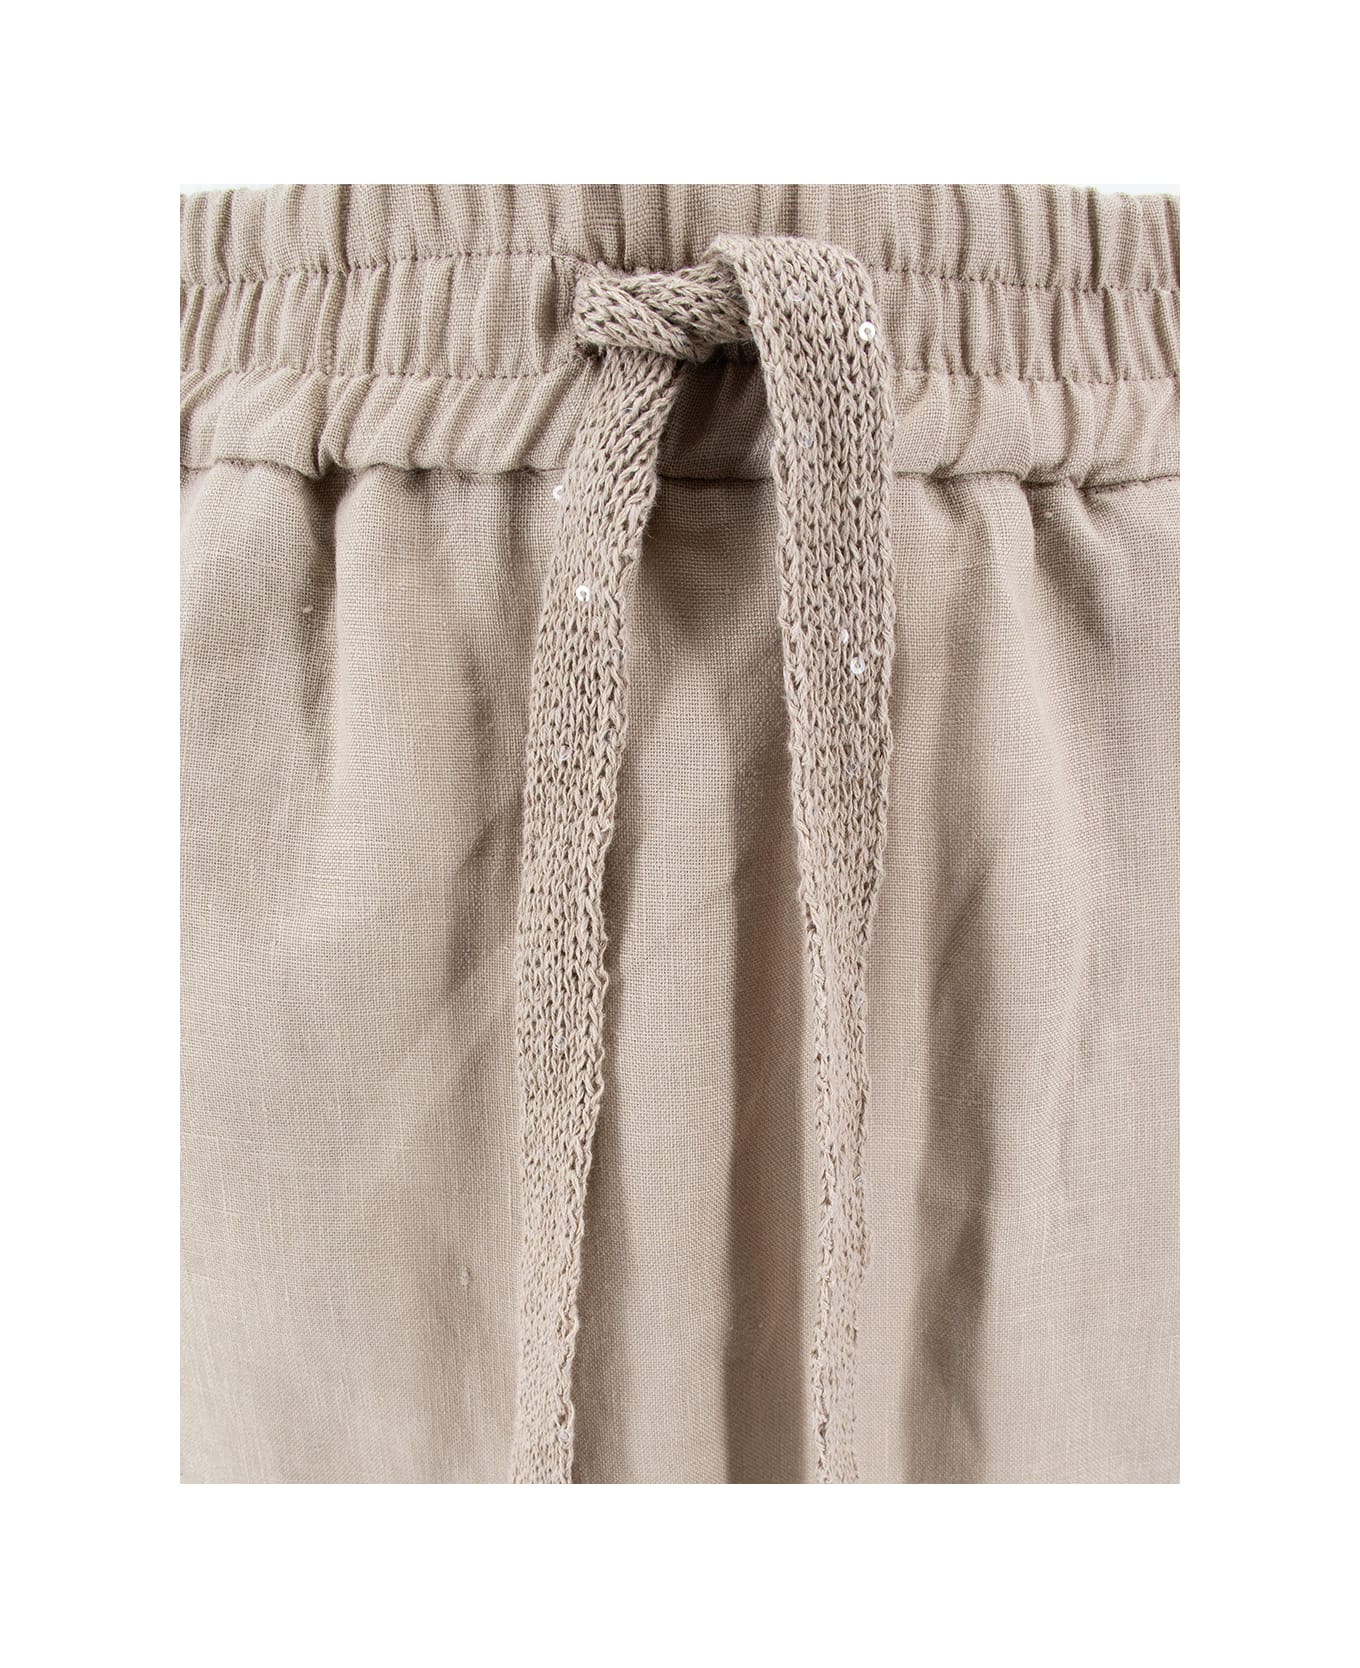 Le Tricot Perugia Skirt - DARK BEIGE